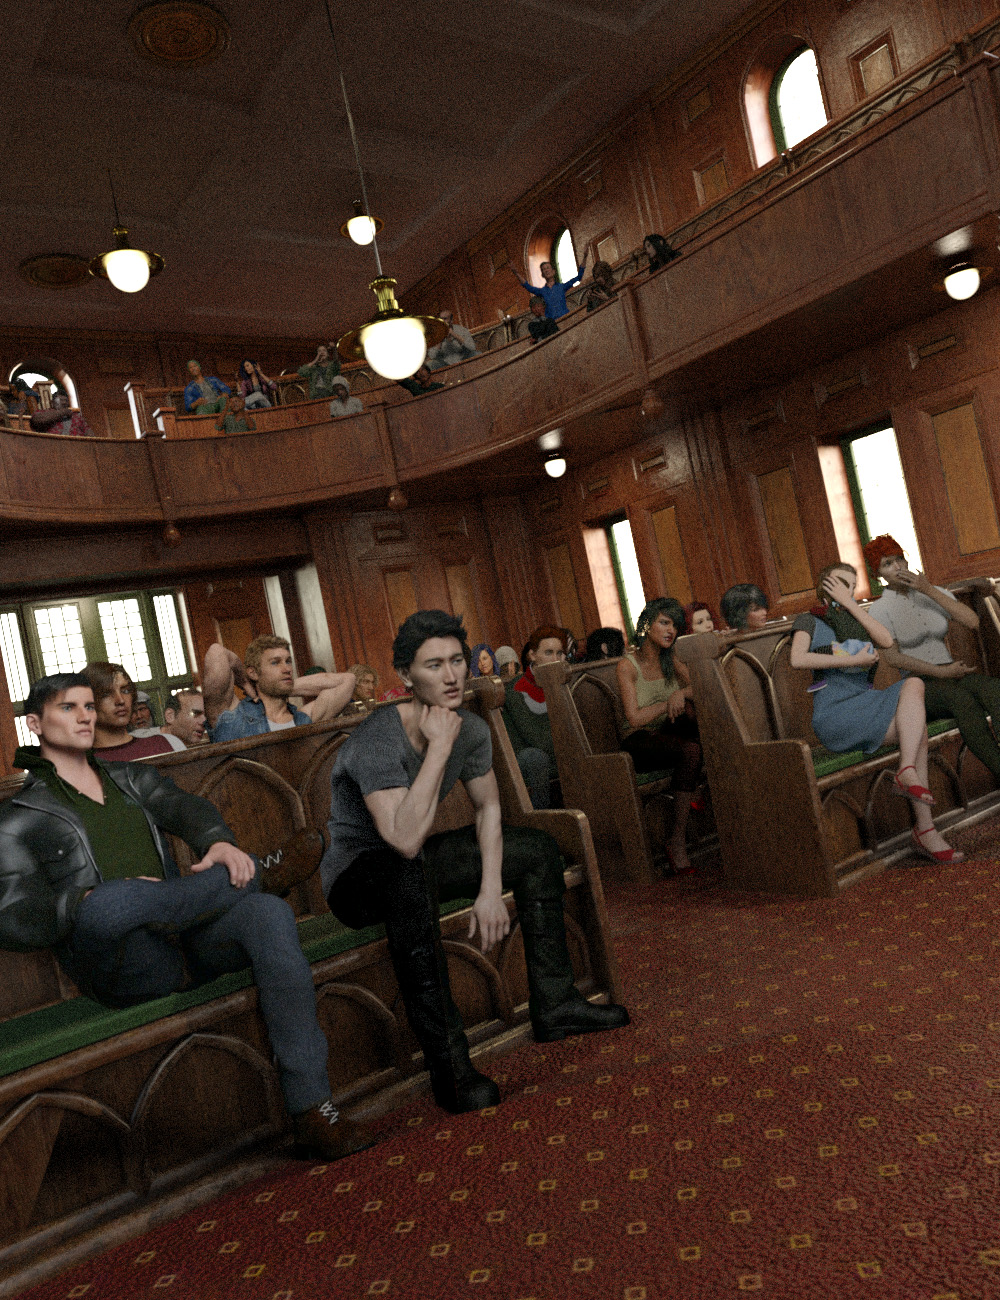 Now-Crowd Billboards - Modern Sitting Crowd by: RiverSoft Art, 3D Models by Daz 3D